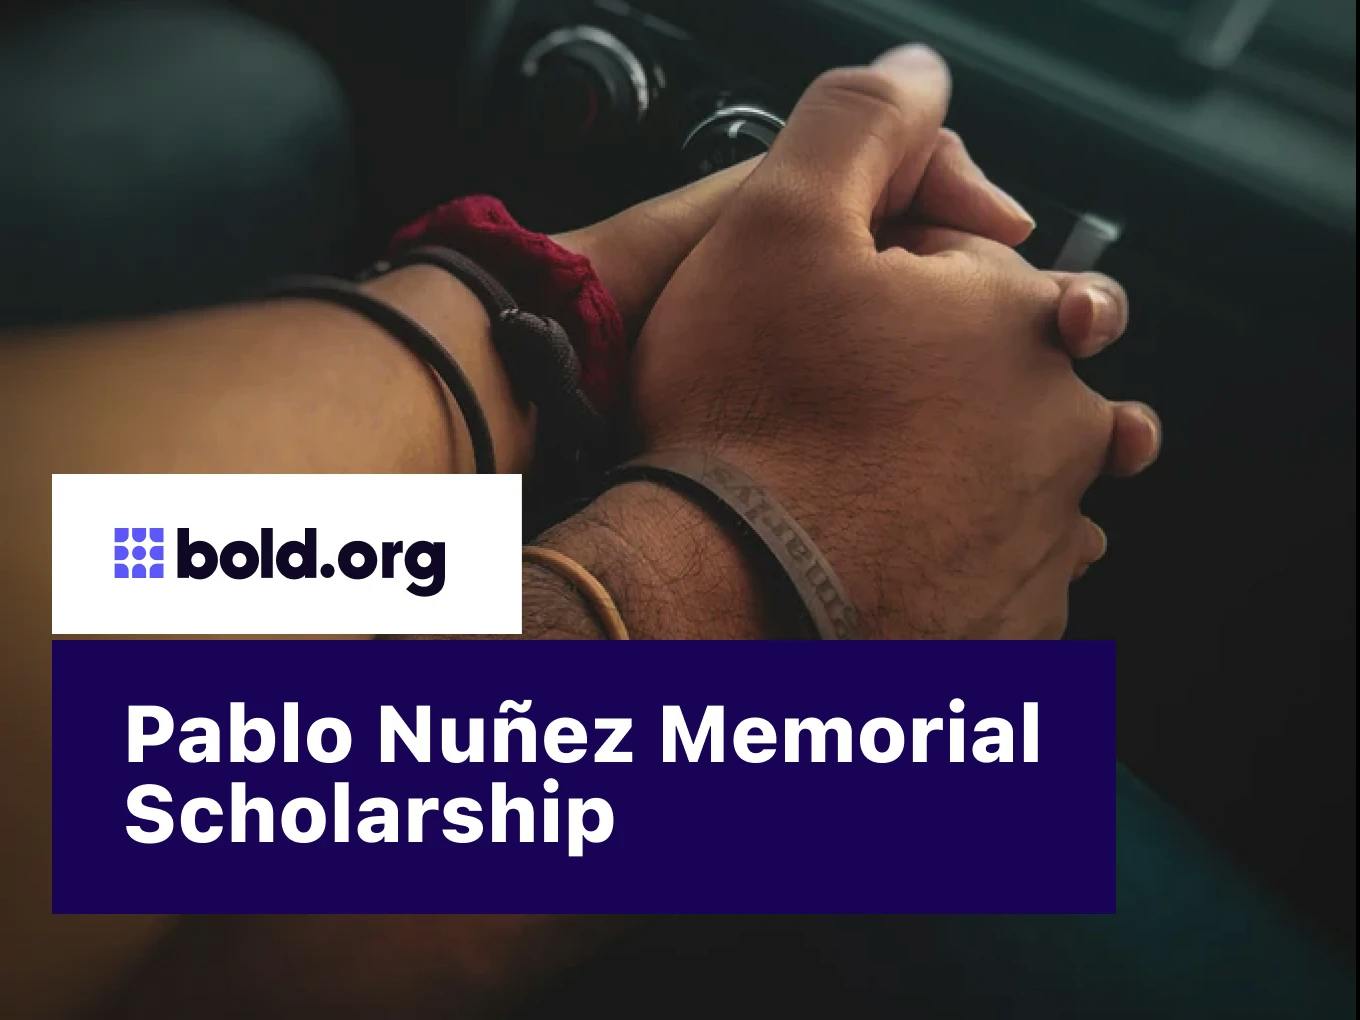 Pablo Nuñez Memorial Scholarship